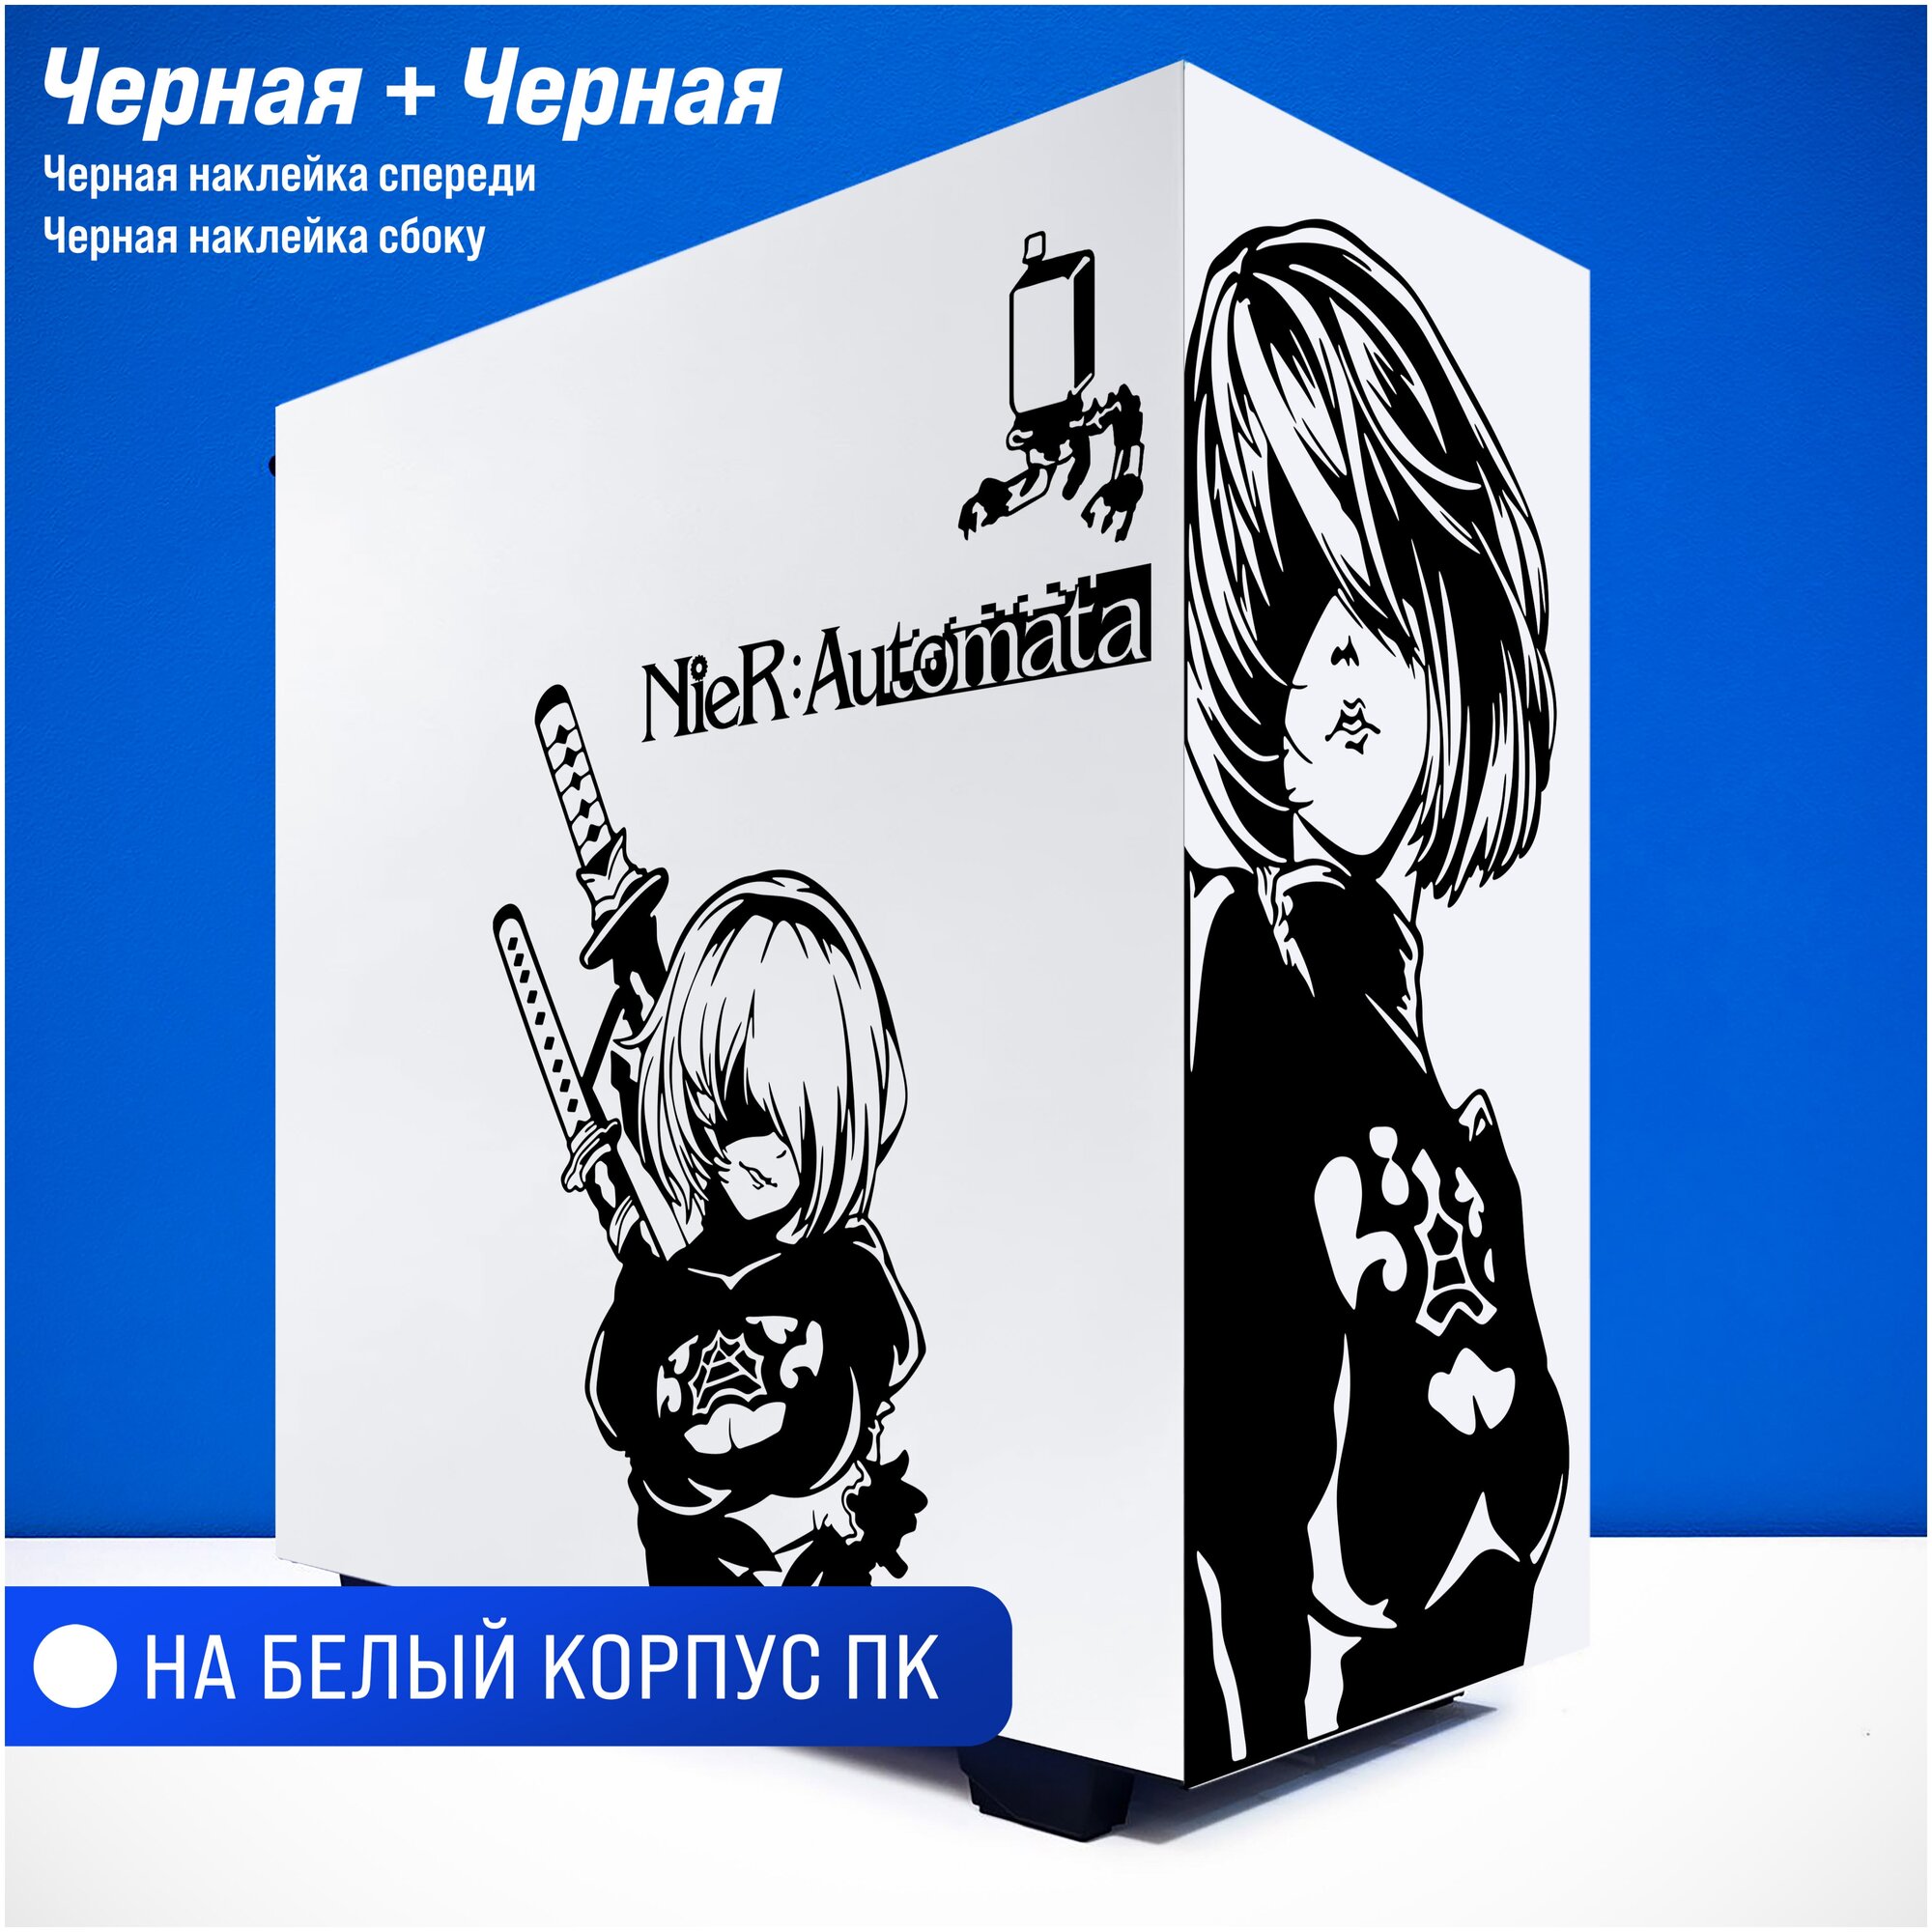 Наклейка на корпус ПК - "Nier: Automata - B"